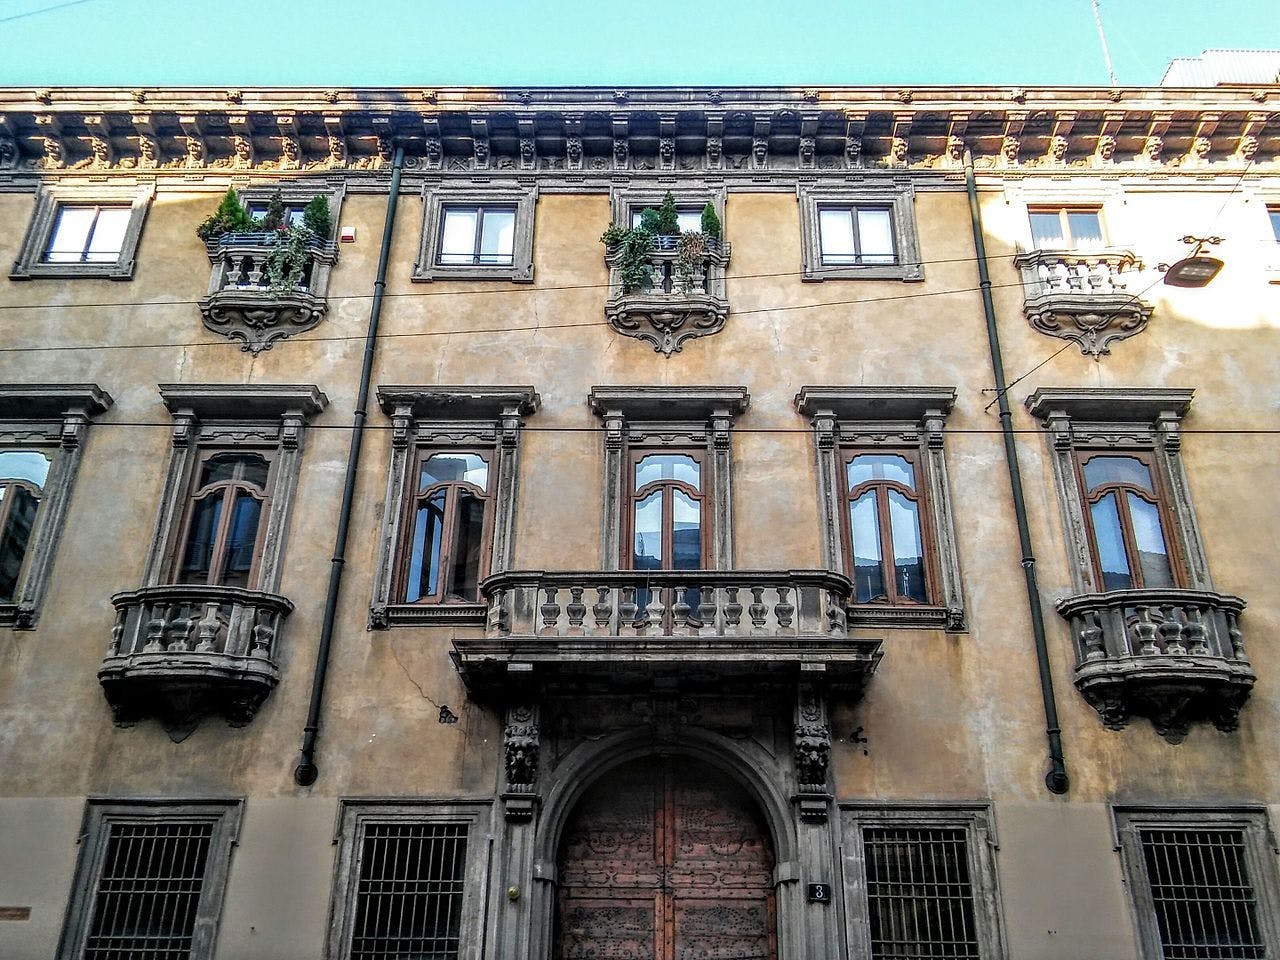 Palazzo Acerbi (by Melancholia, CC BY-SA 4.0, Wikimedia Commons)